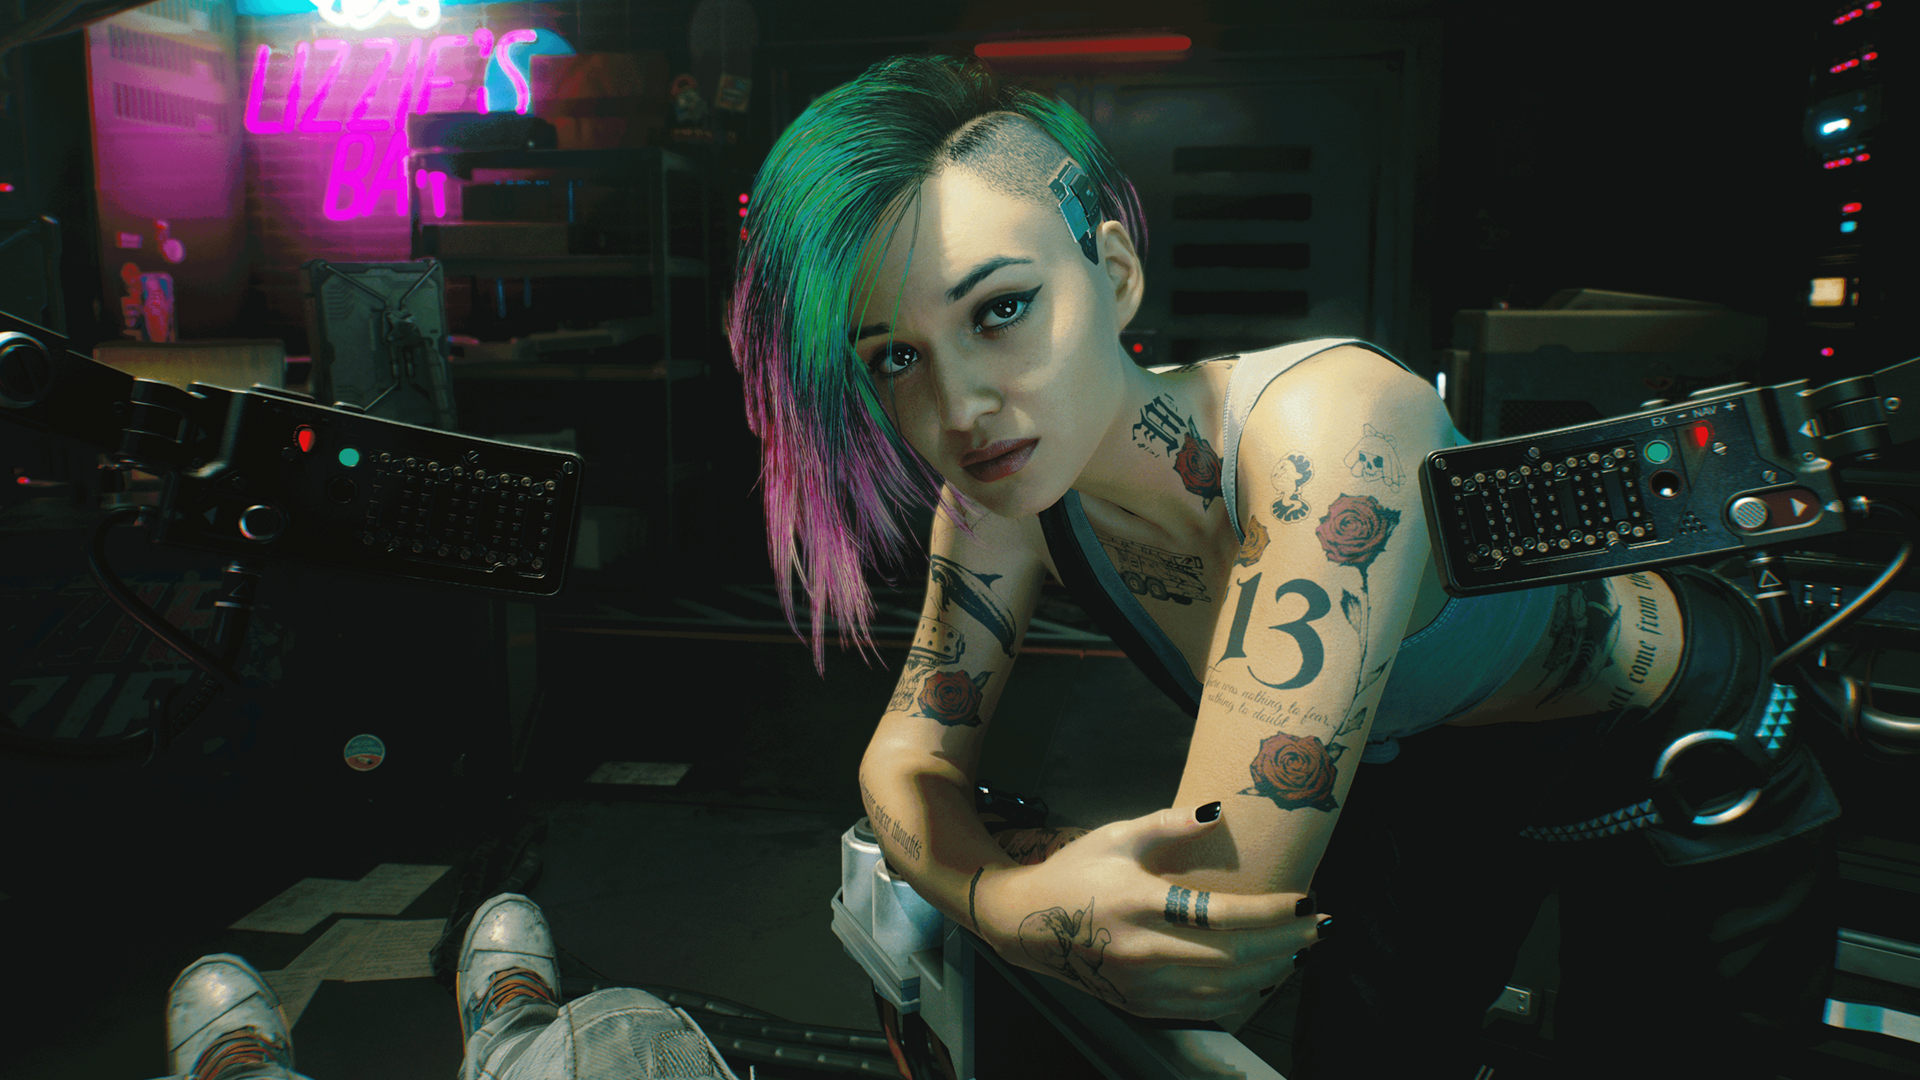 cyberpunk 2077 characters - judy alvarez